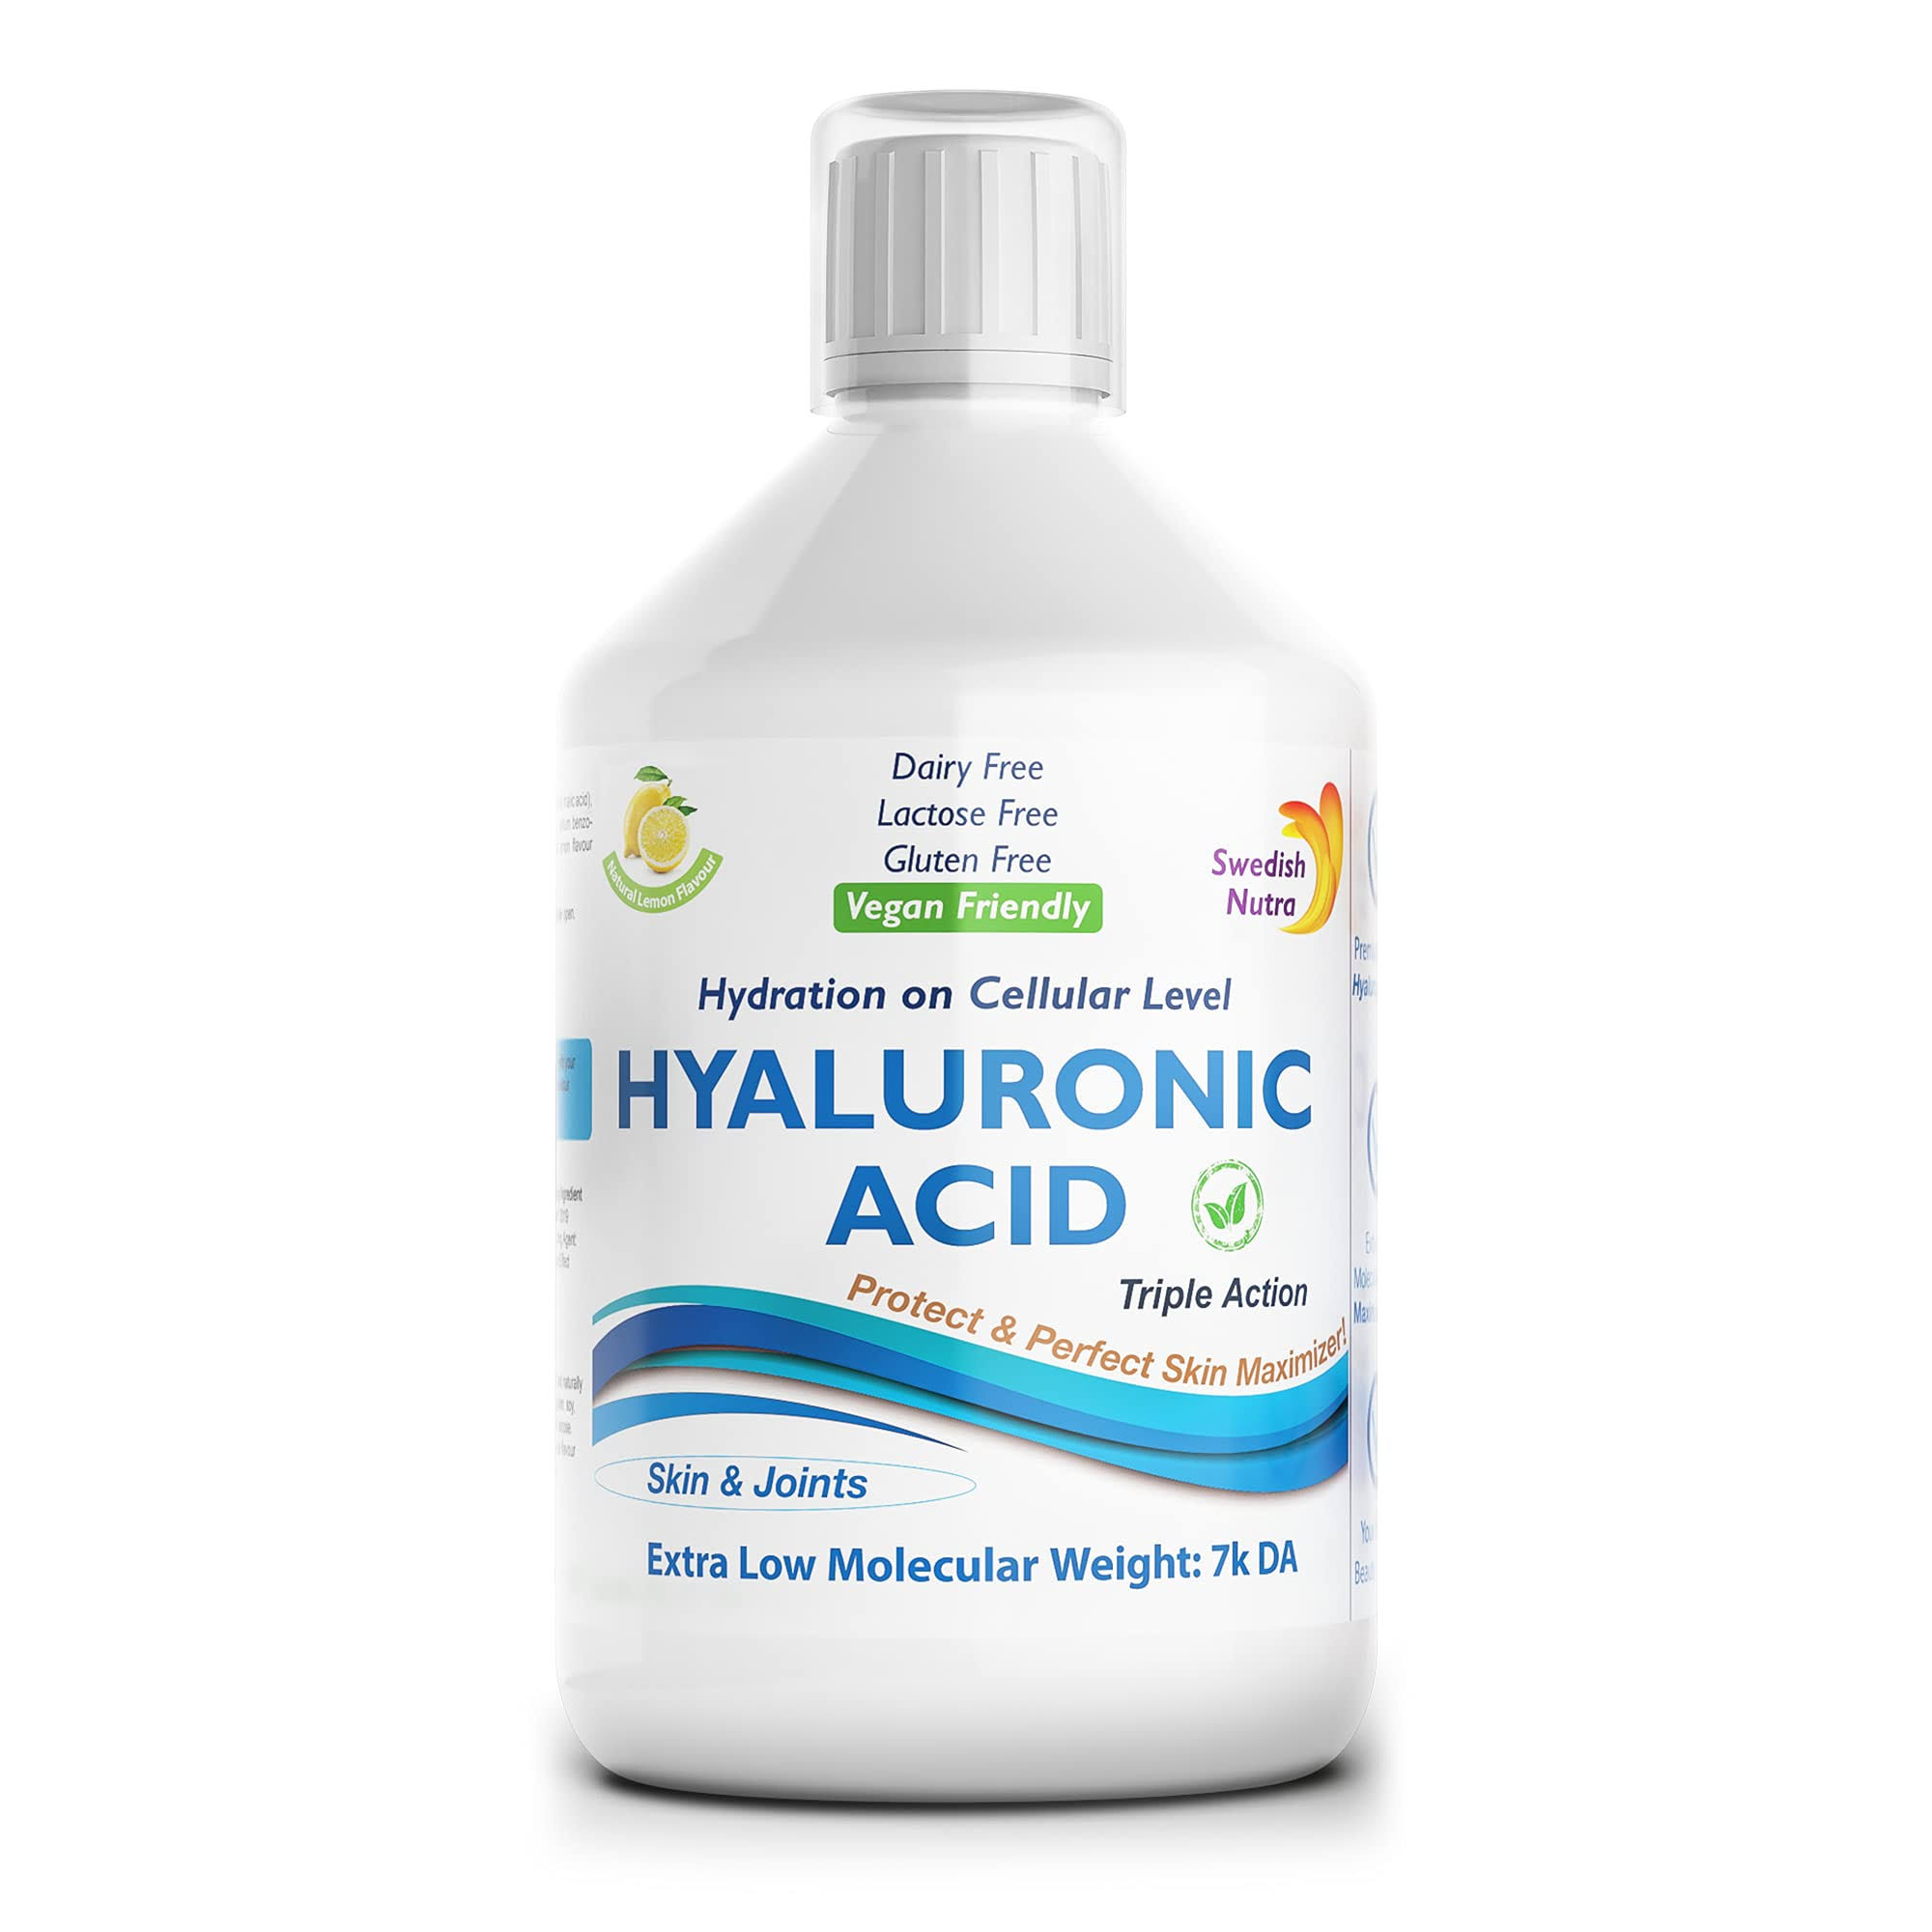 Swedish Nutra Hyaluronic Acid Skin & Joints Triple Action Vitamin Liquid